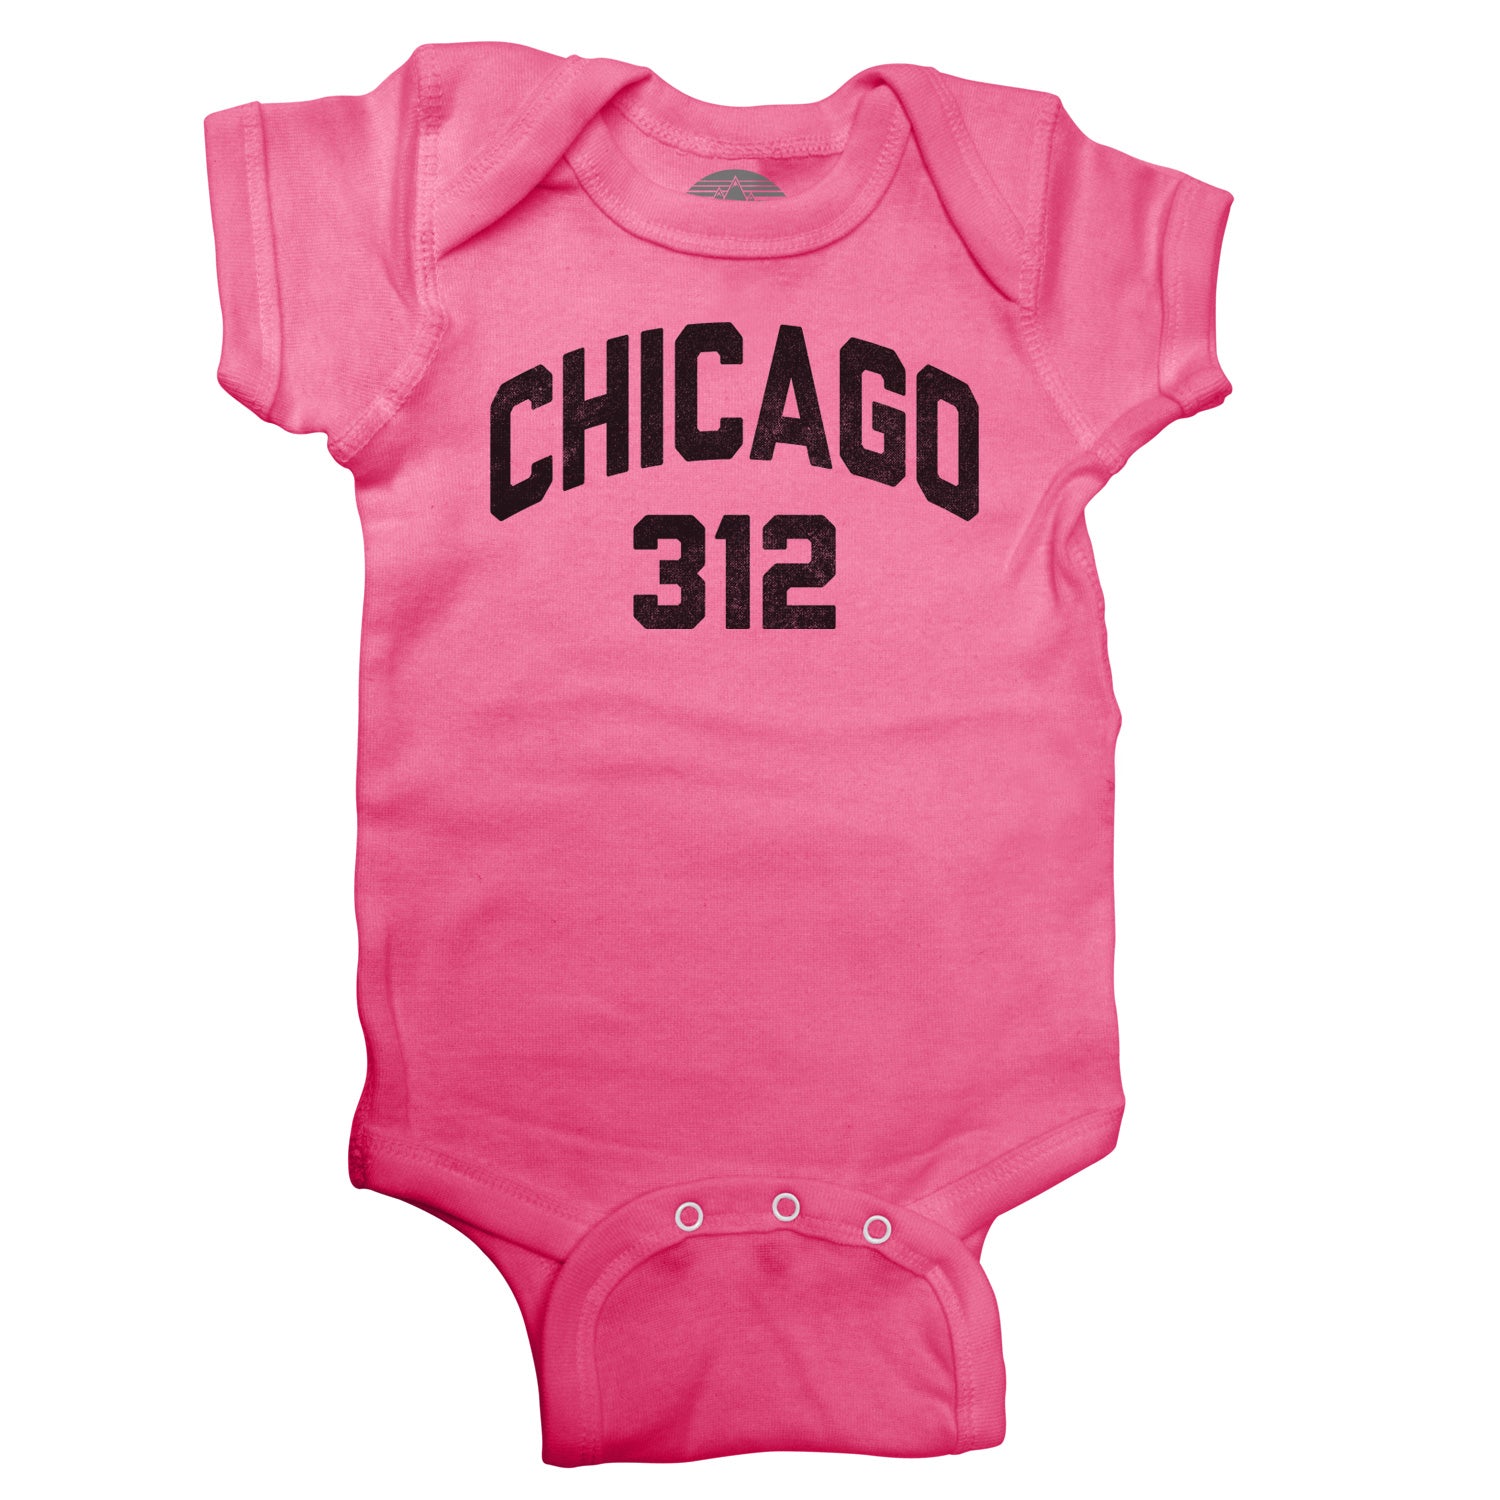 Chicago 312 Area Code Infant Bodysuit - Unisex Fit